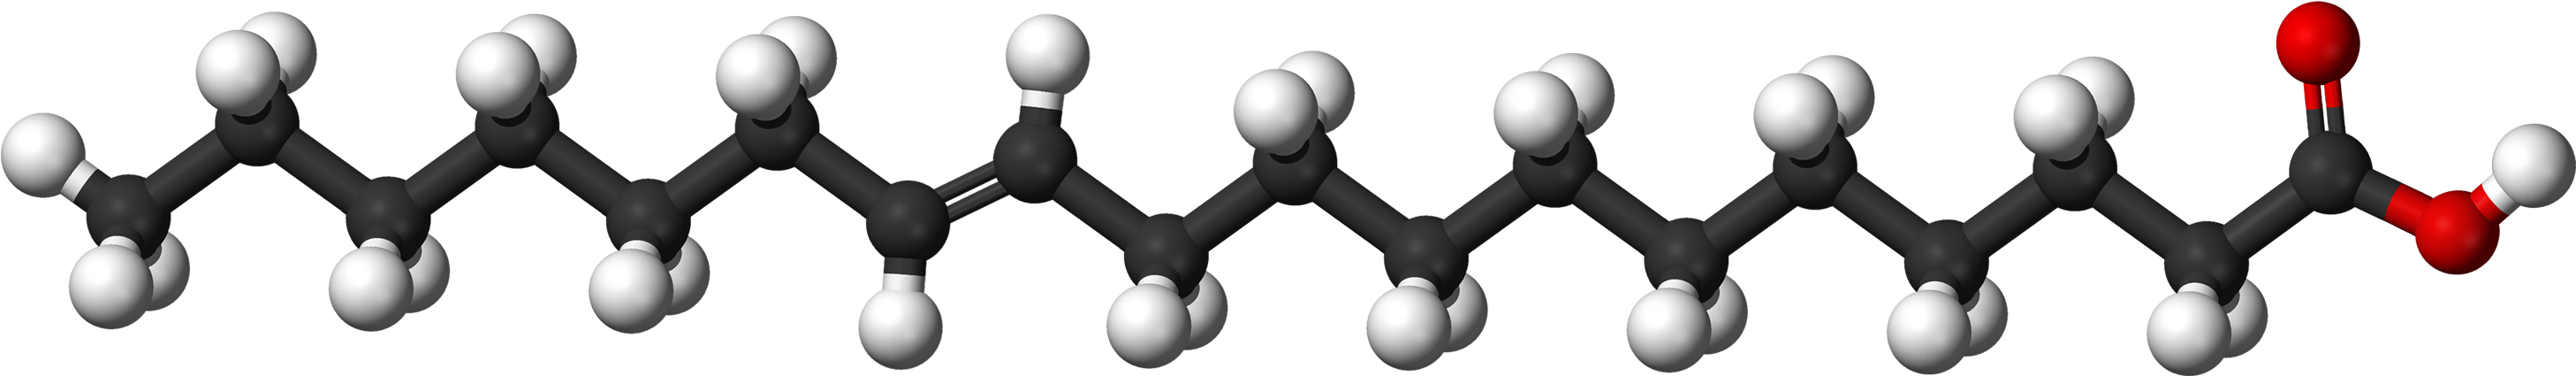 Fatty Acid Molecule Structure PNG image